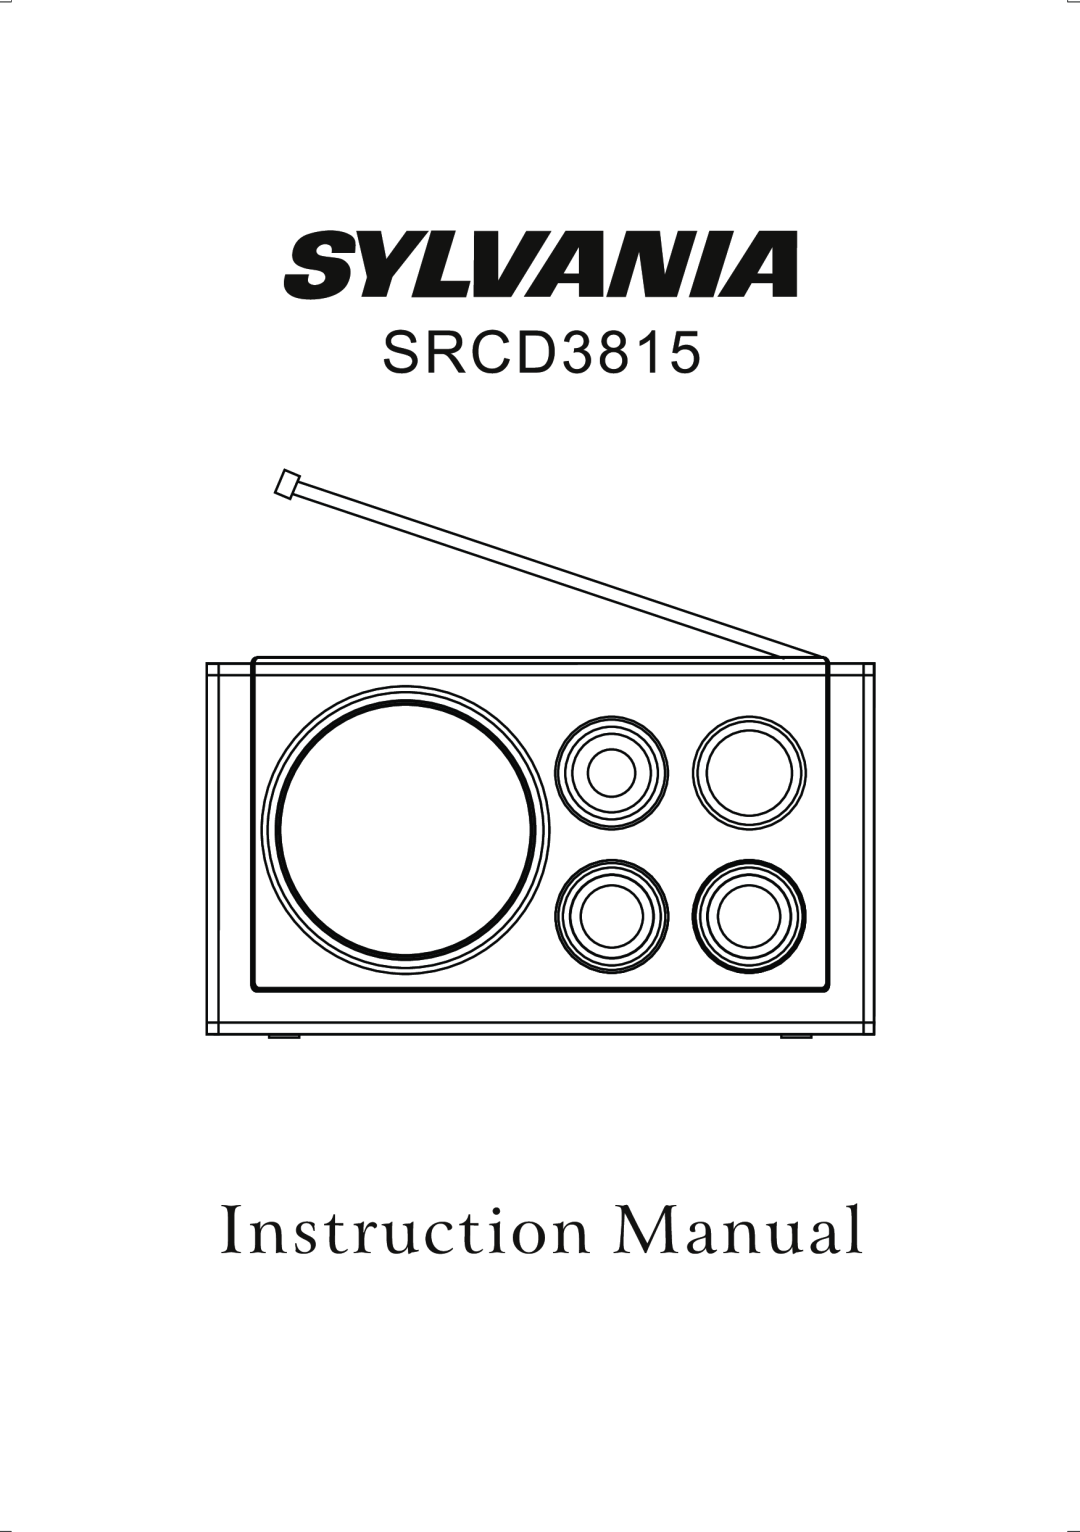 Sylvania SRCD3815 instruction manual 